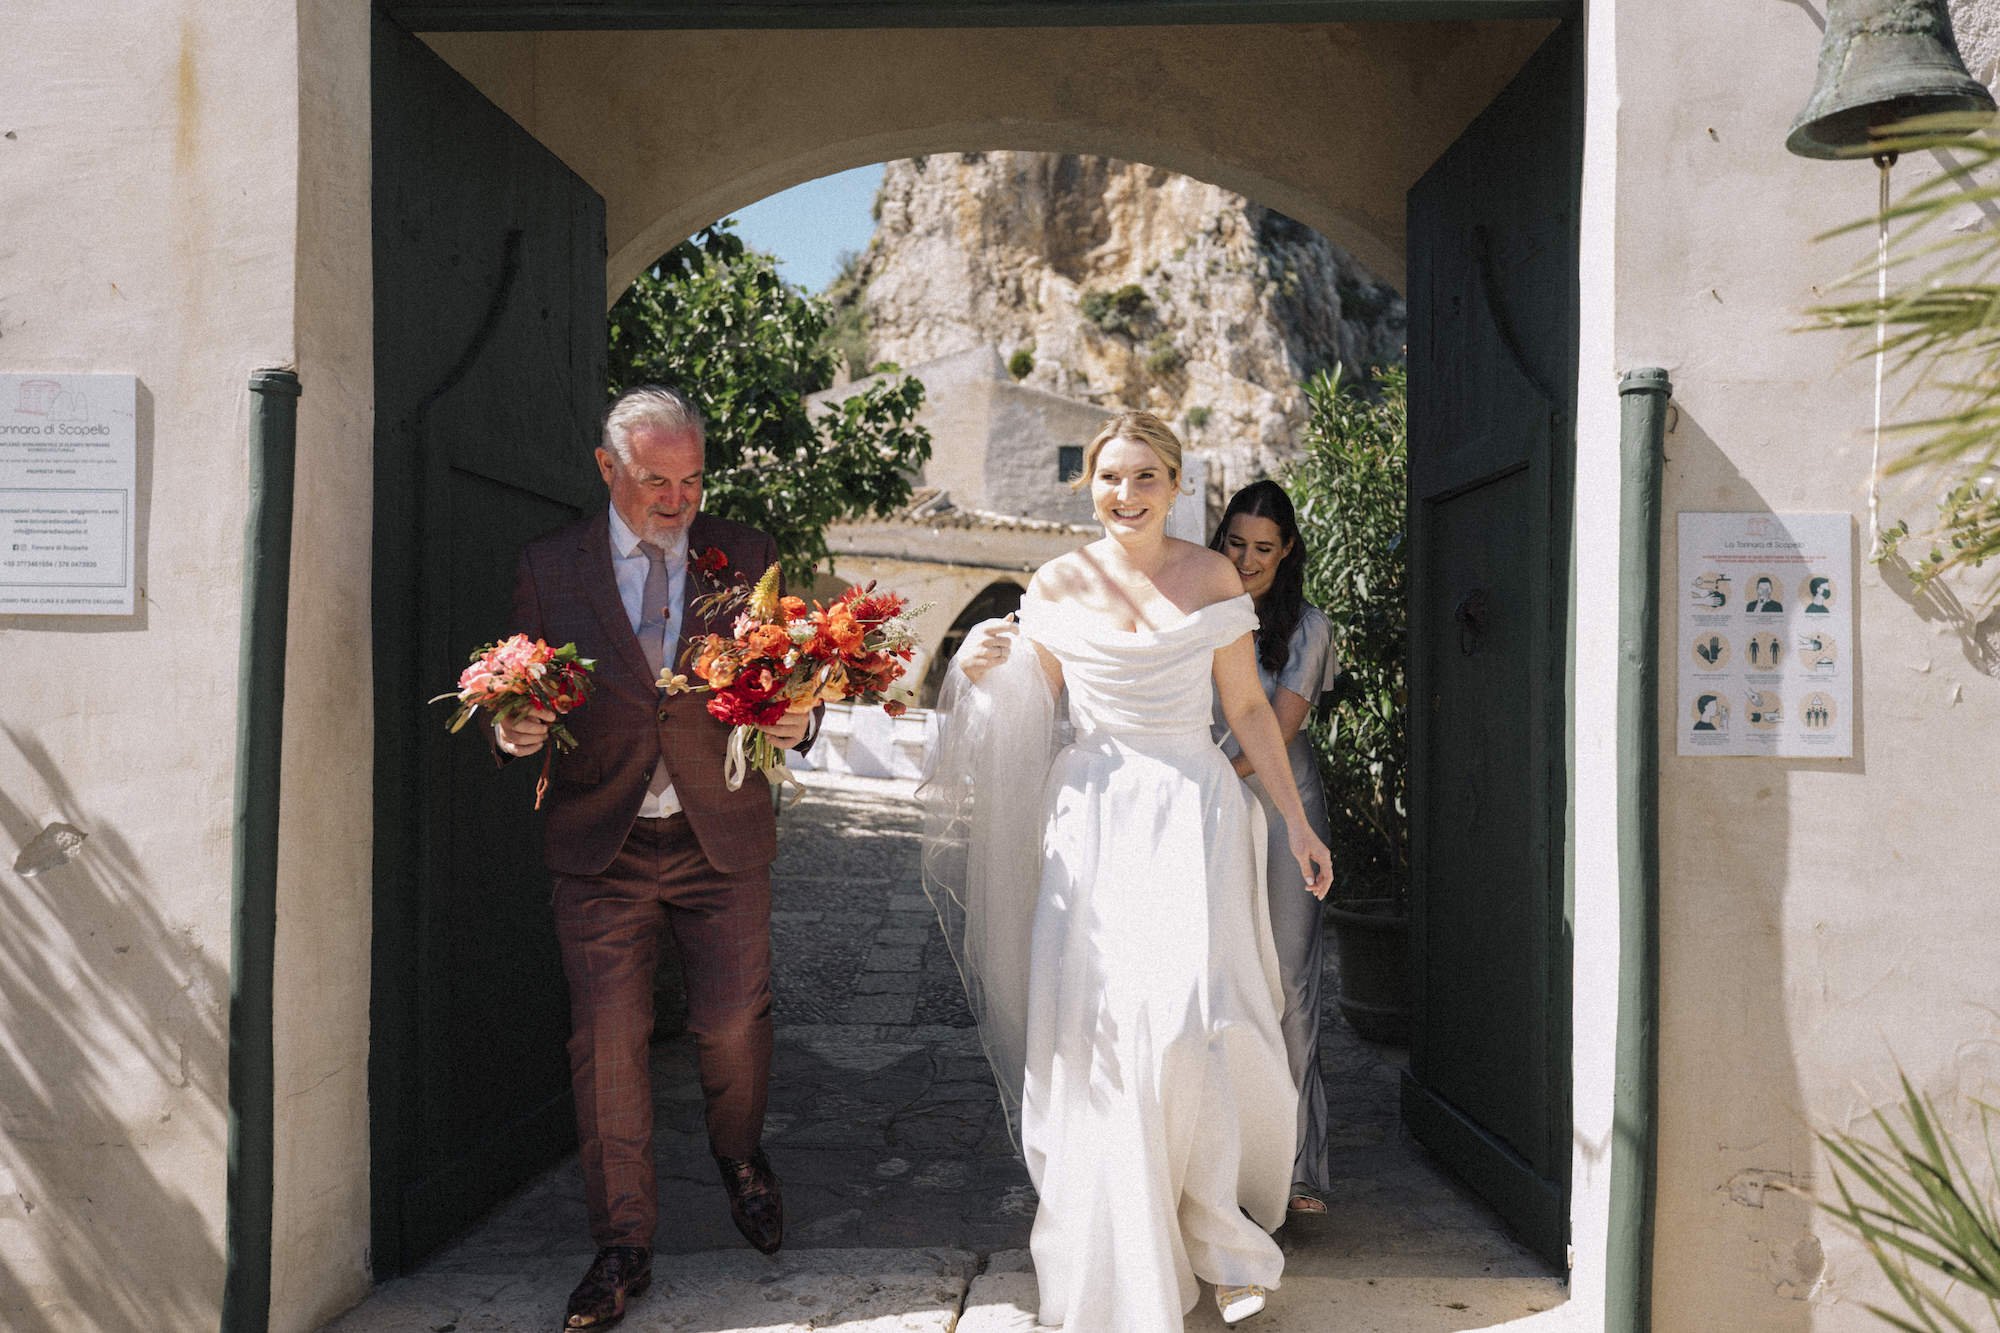 Beautiful bride Sophie wore the Okotan corset and Ellie skirt | Wedding dress by Halfpenny London